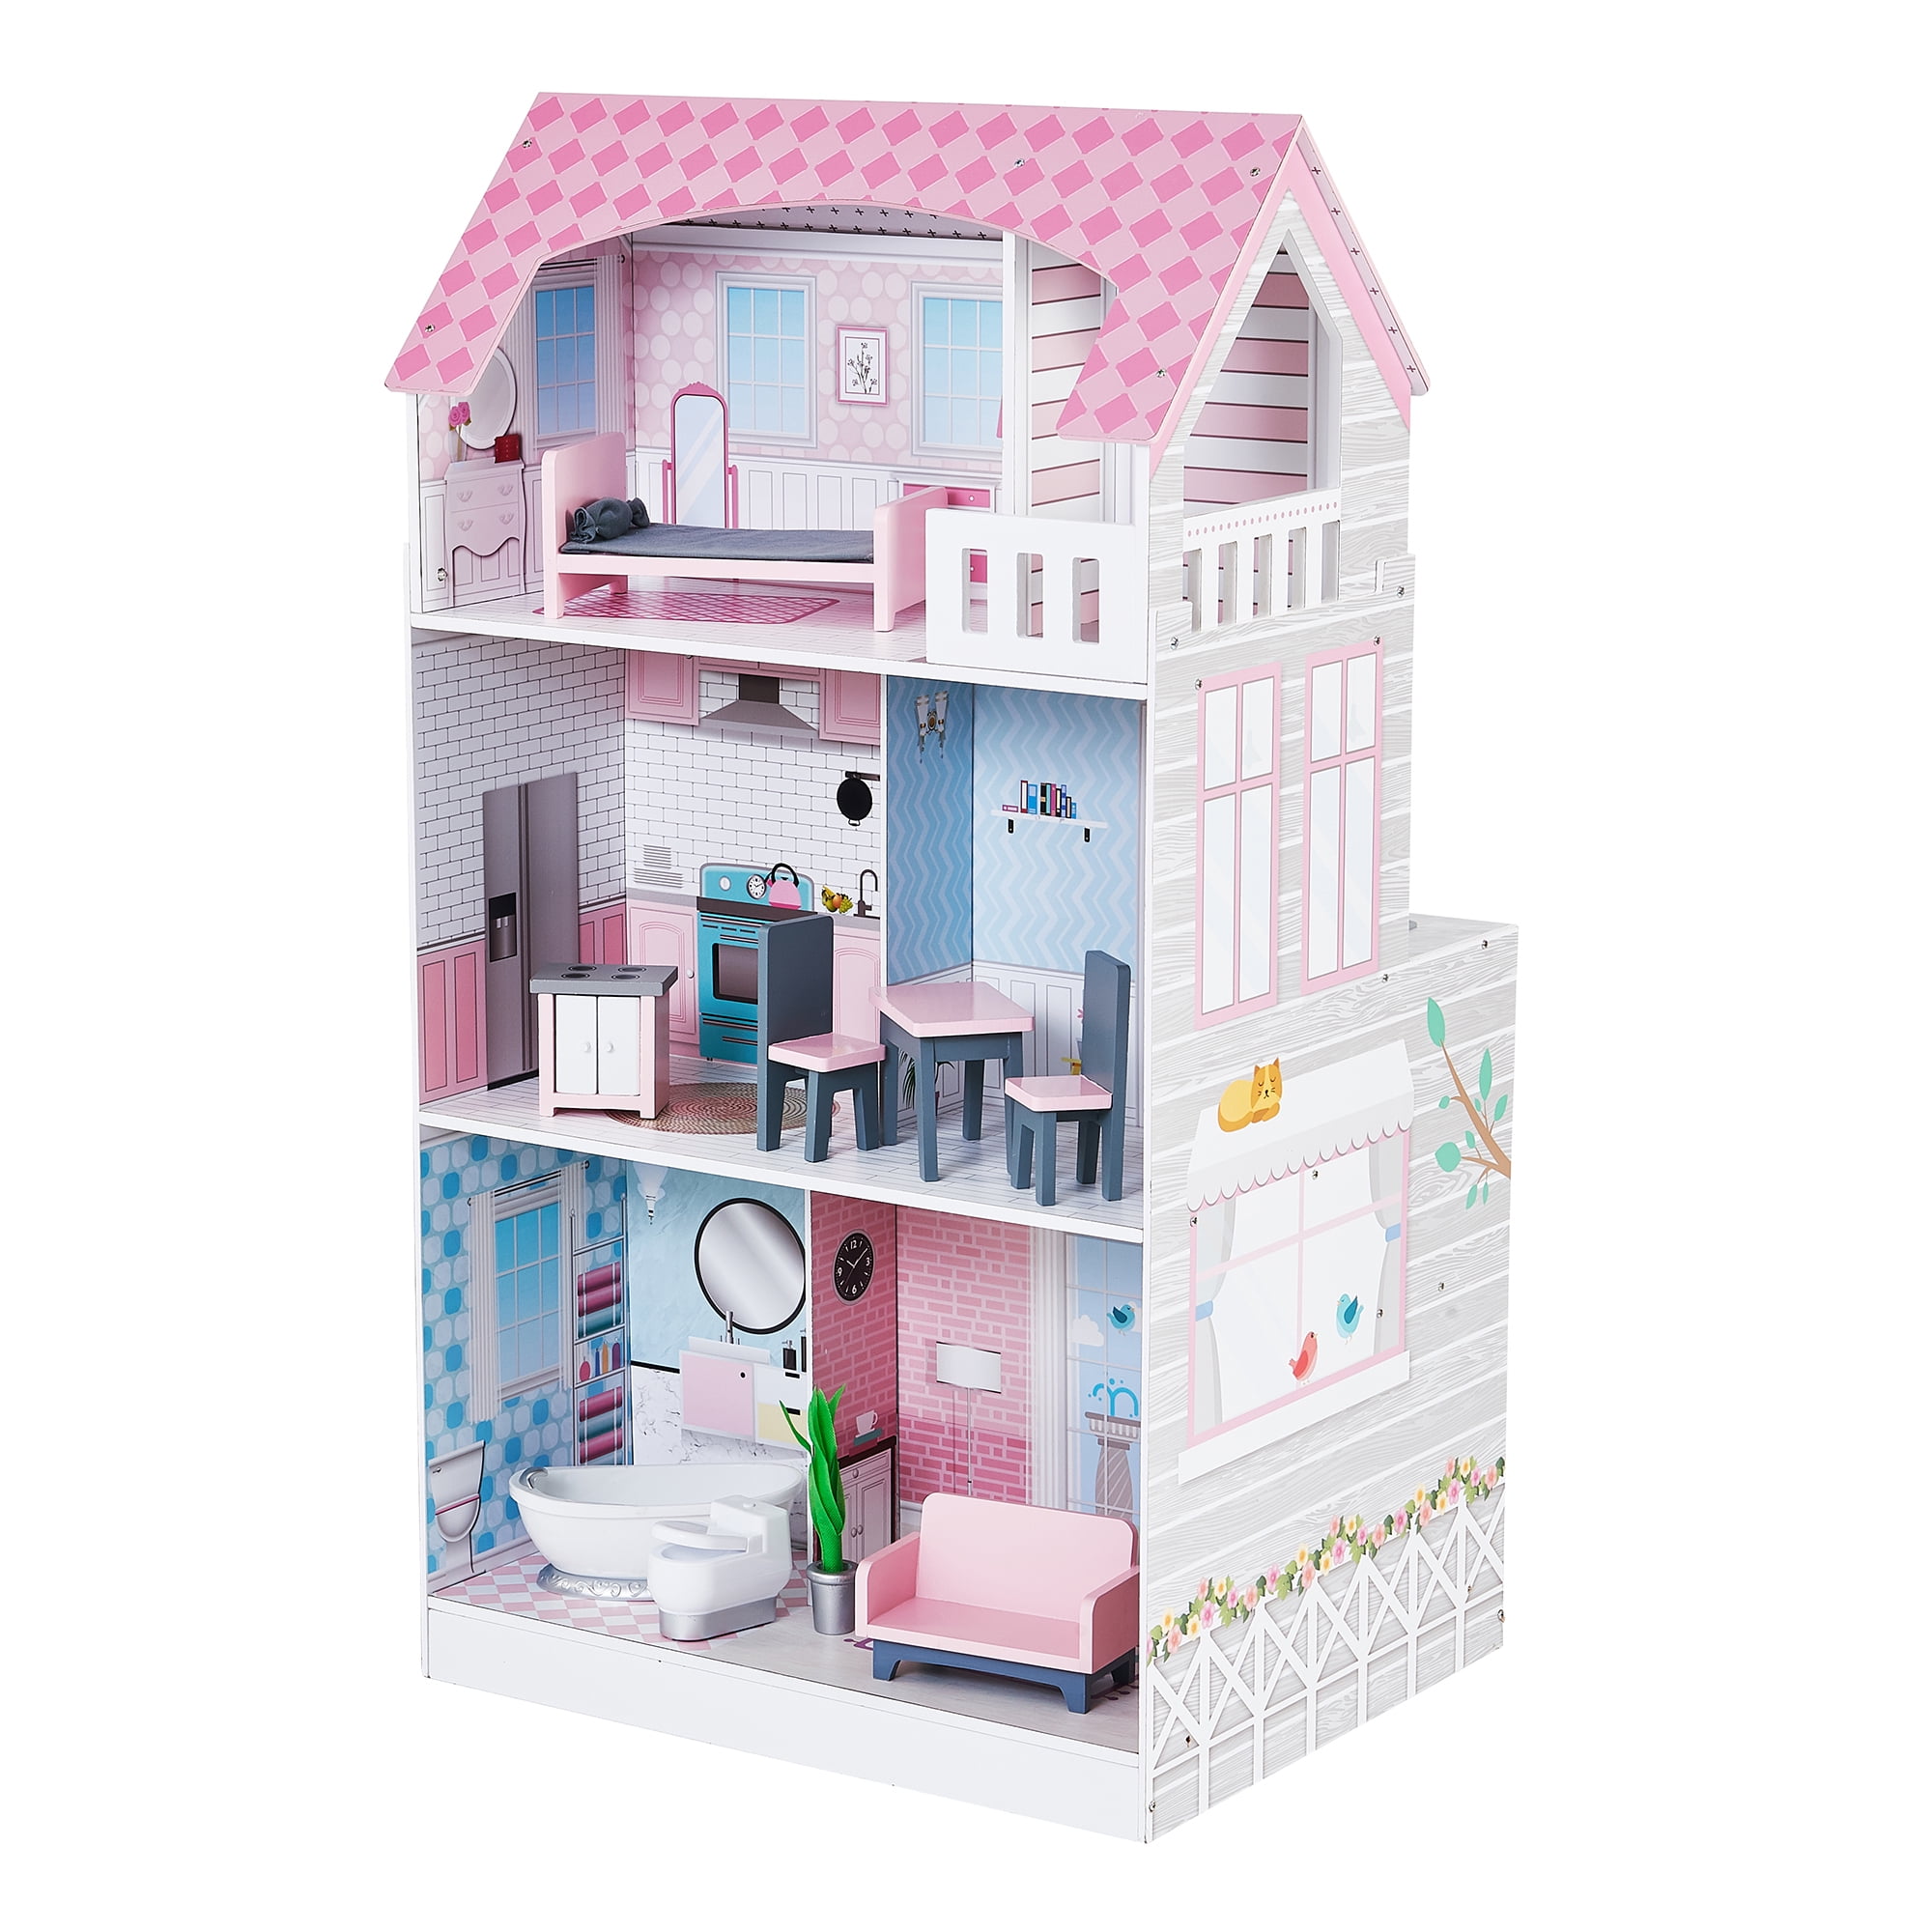 ToyDor Princess Doll BIG kitchen set for kids Girls Toys For Kids Non Toxic  BPA Free Material used Kitchen play set( MEDIUM SIZE) (AA DISNEY PRINCESS  KITCHEN SET) - Princess Doll BIG